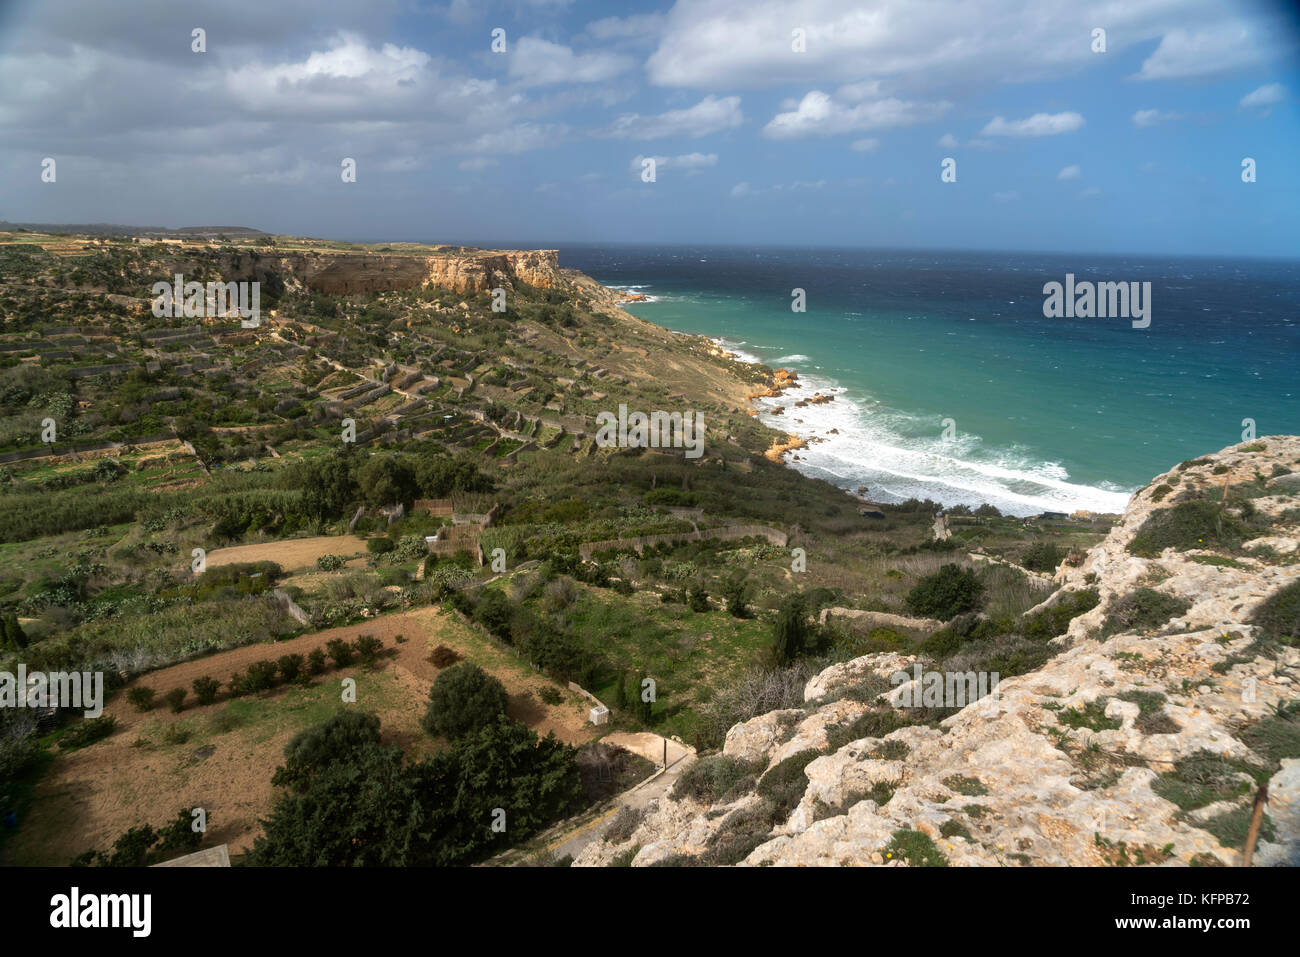 San Blas Bay im Nordosten der Insel Gozo, Malta | rocky beach of San Blas Bay, north eastern Gozo, Malta Stock Photo